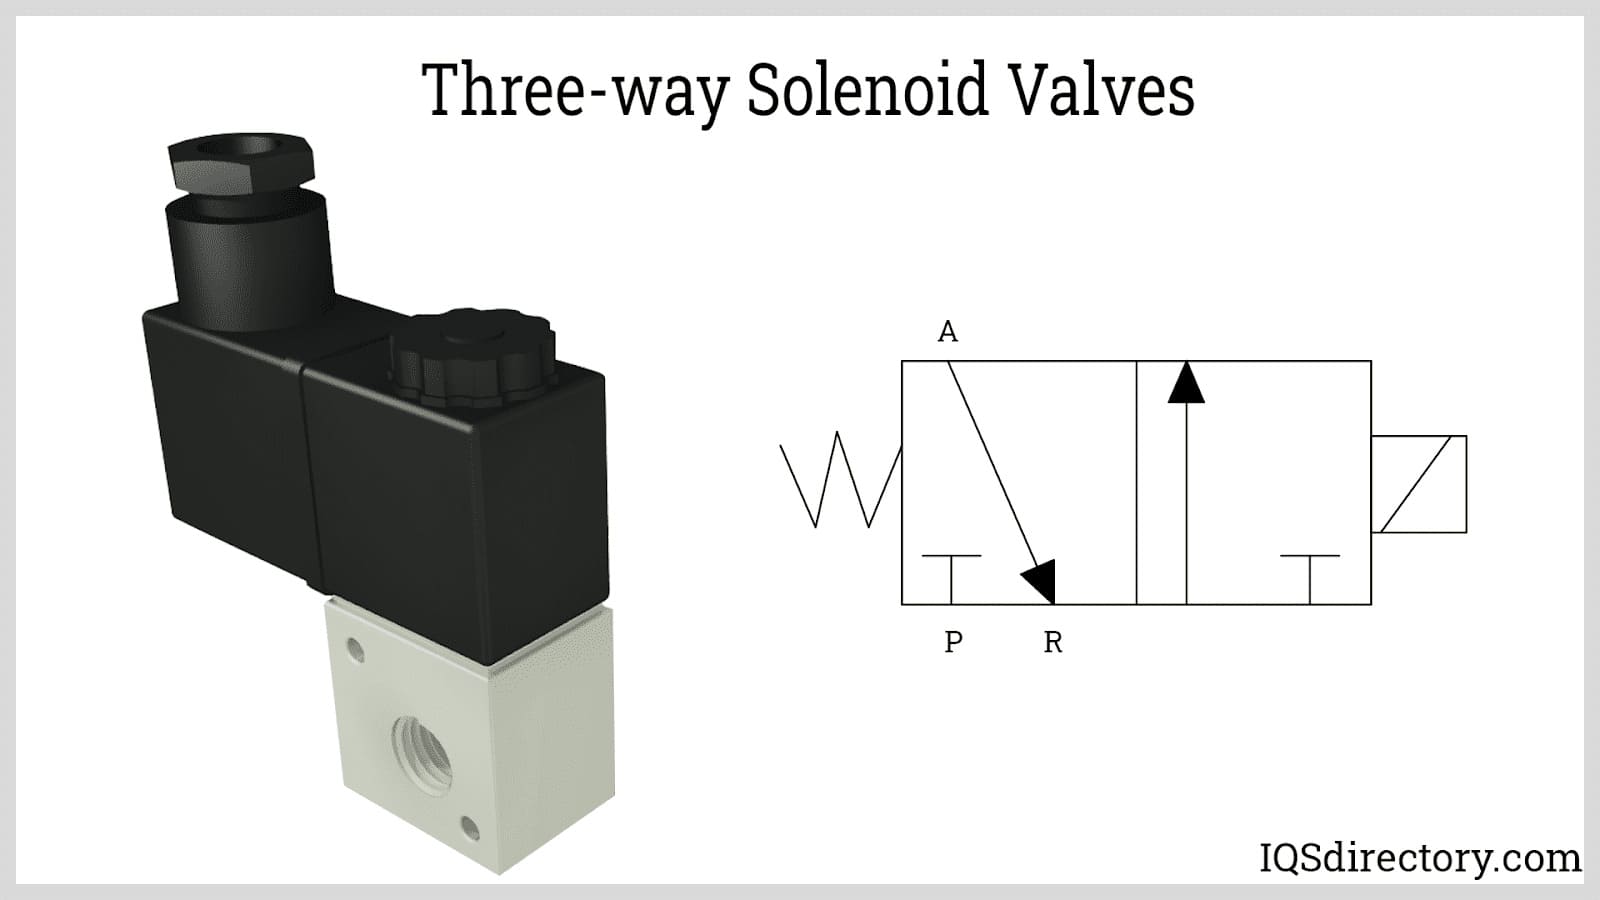 Three-way Solenoid Valves